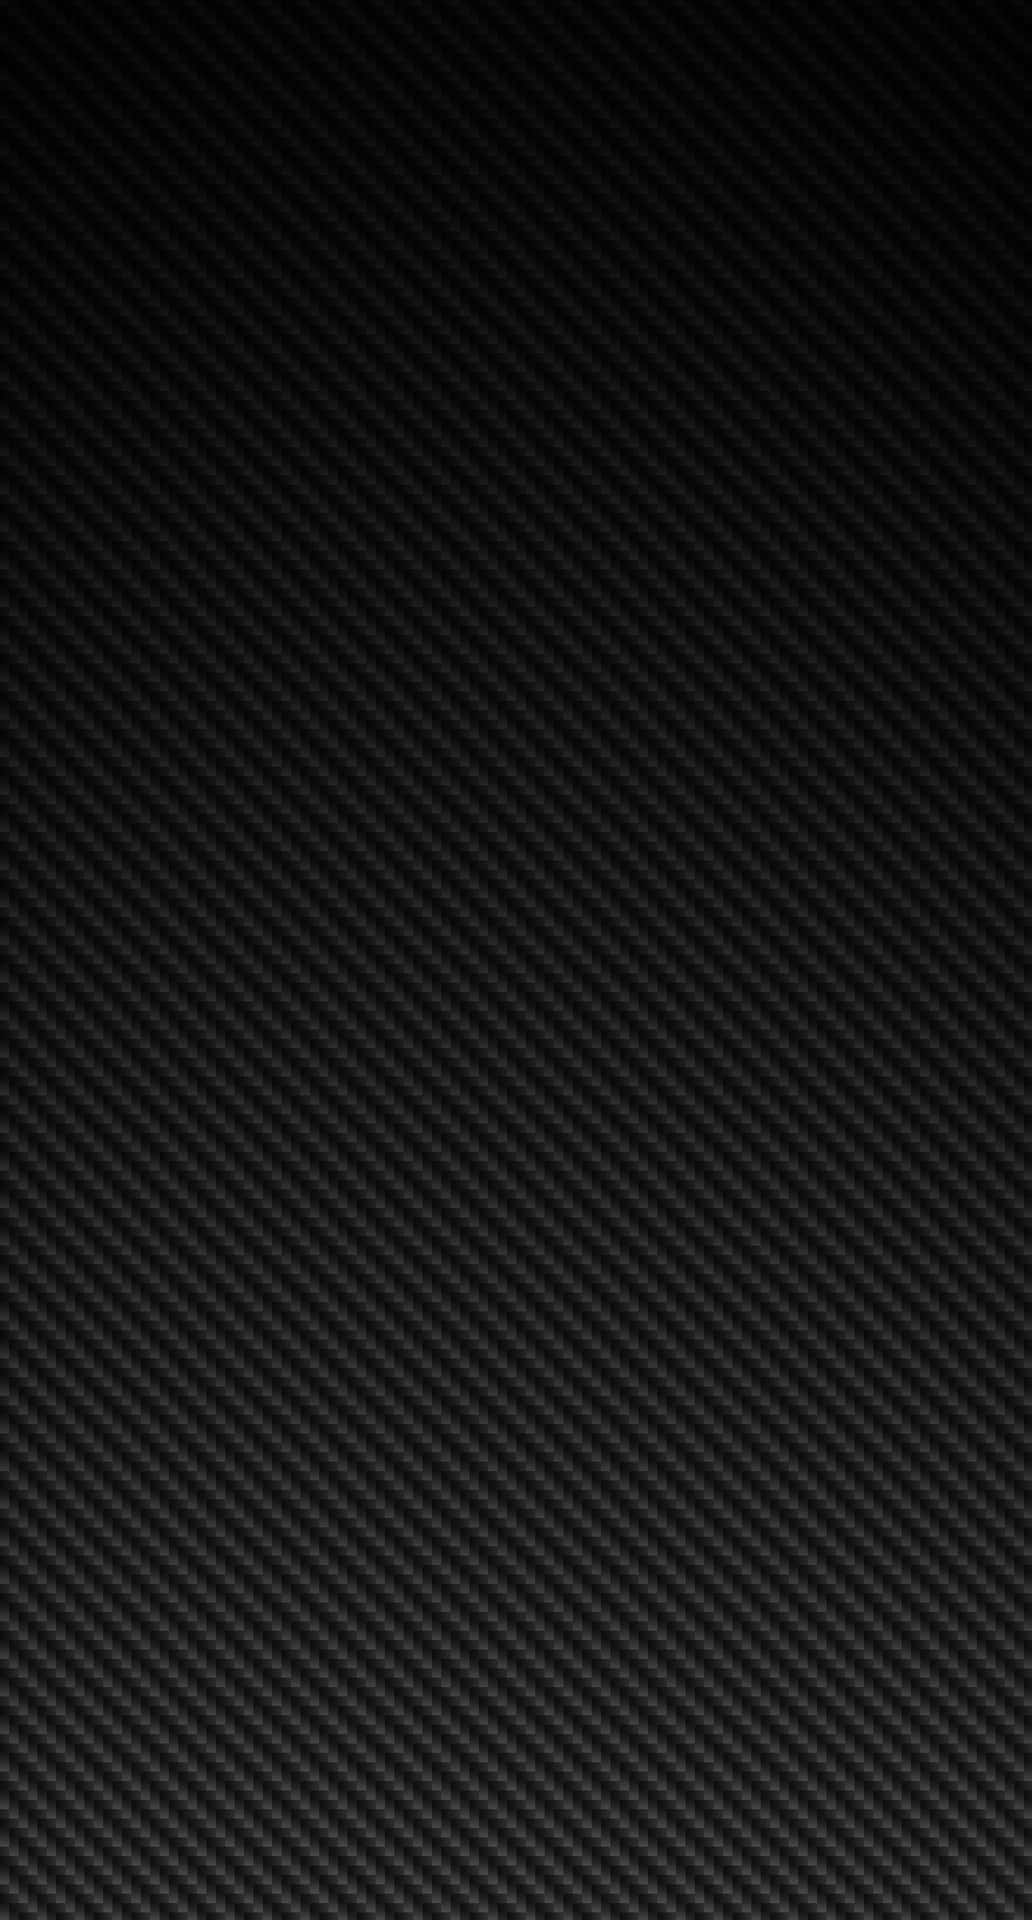 A Black Carbon Fiber Background With A Black Background Wallpaper